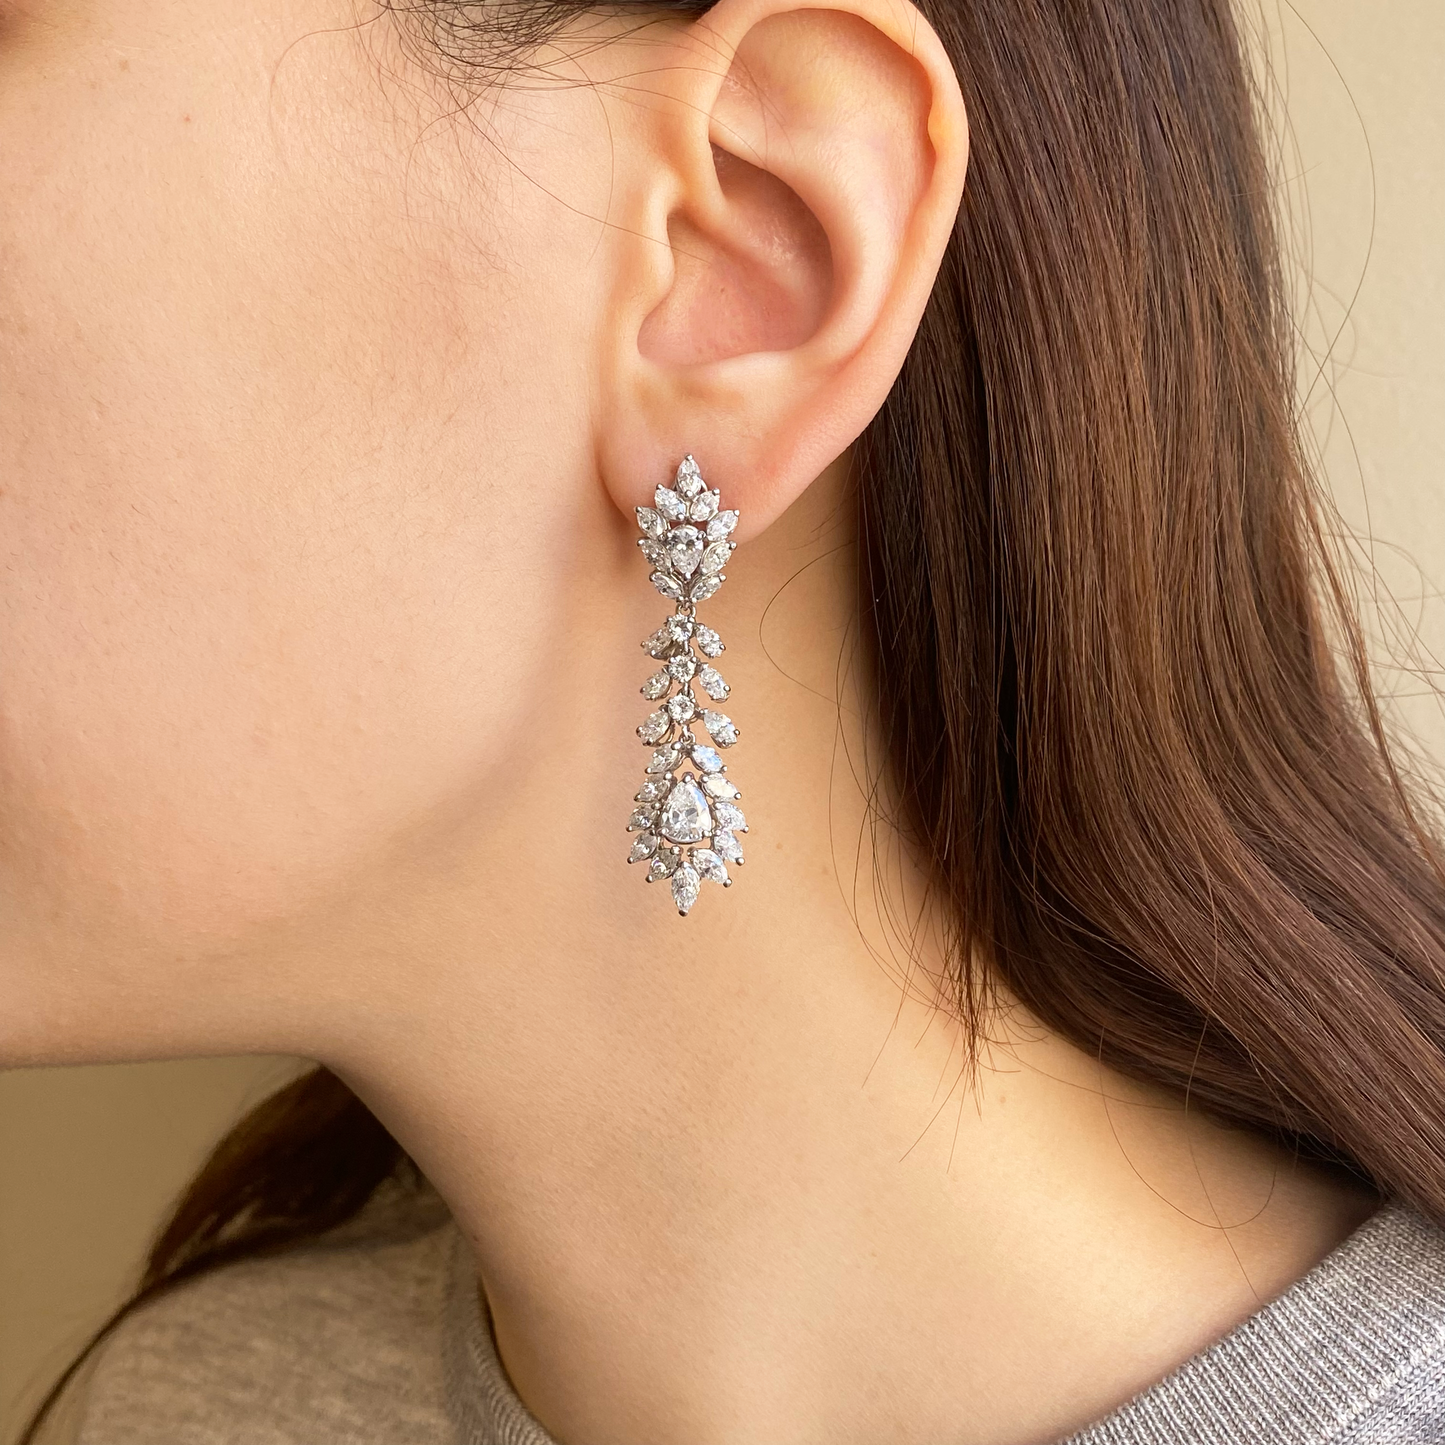 1960s Platinum Diamond Earrings worn on ear